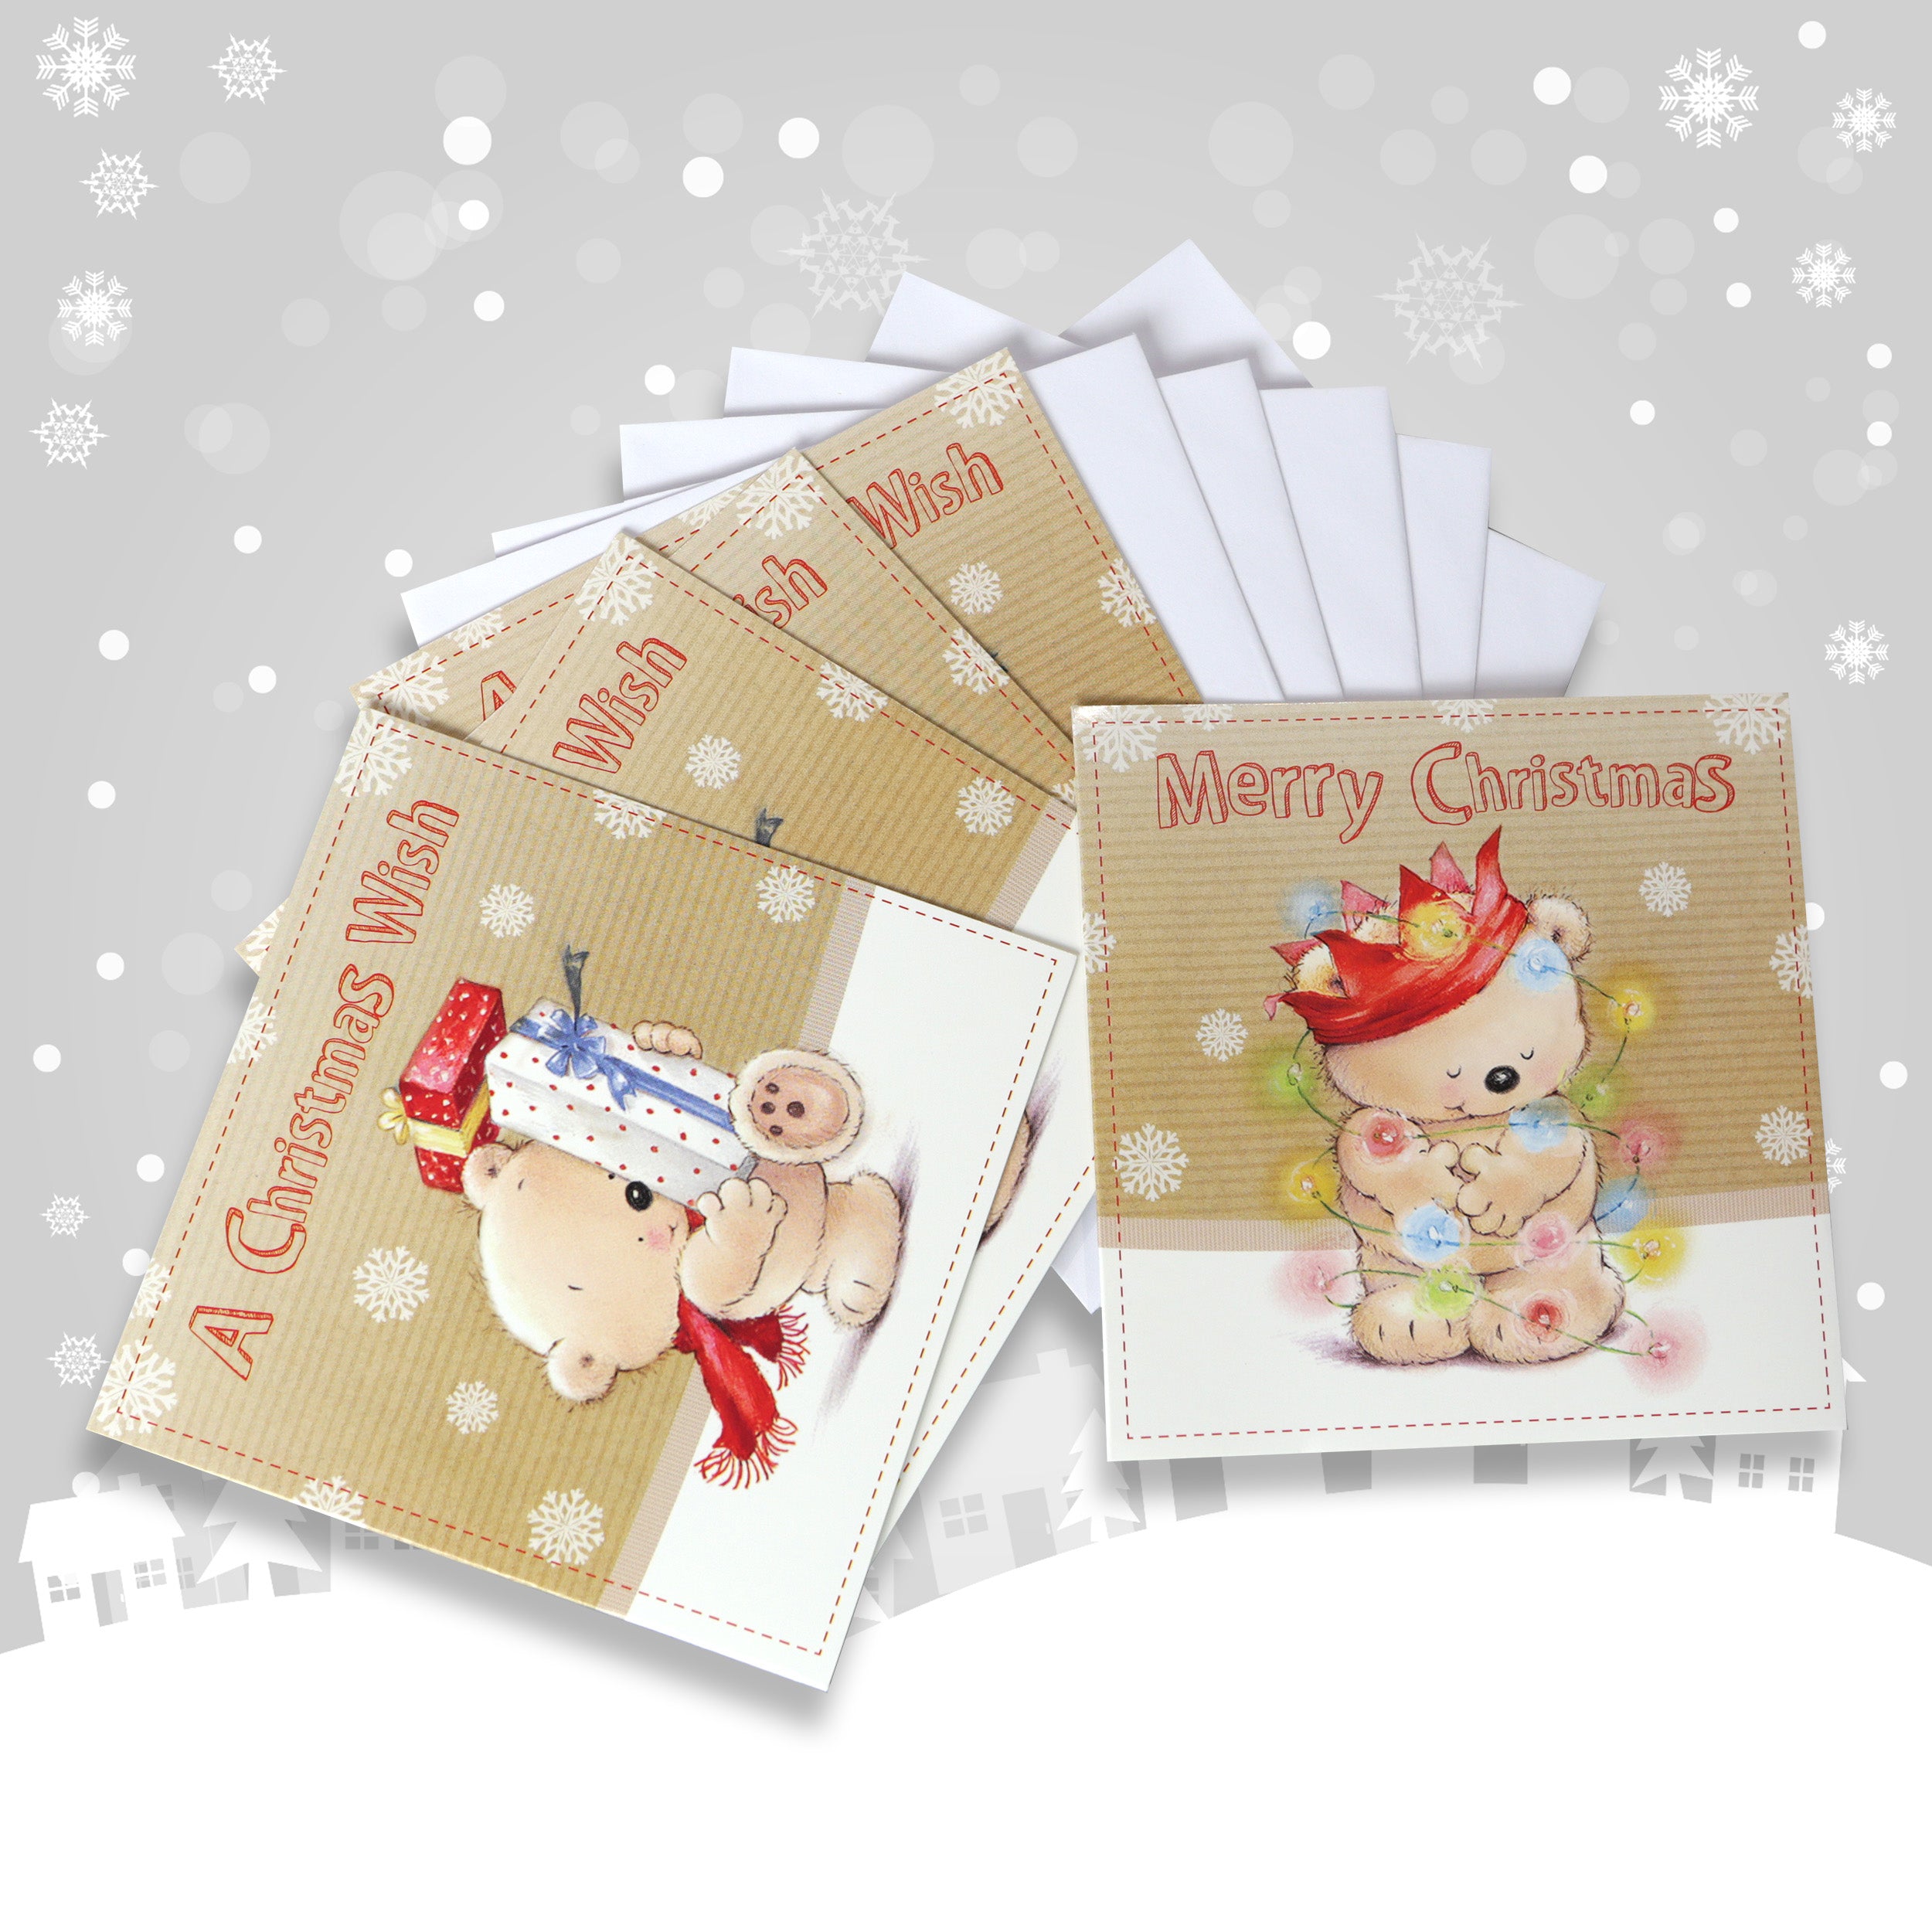 Pack of 20 Christmas Cards - Teddy Bear Design